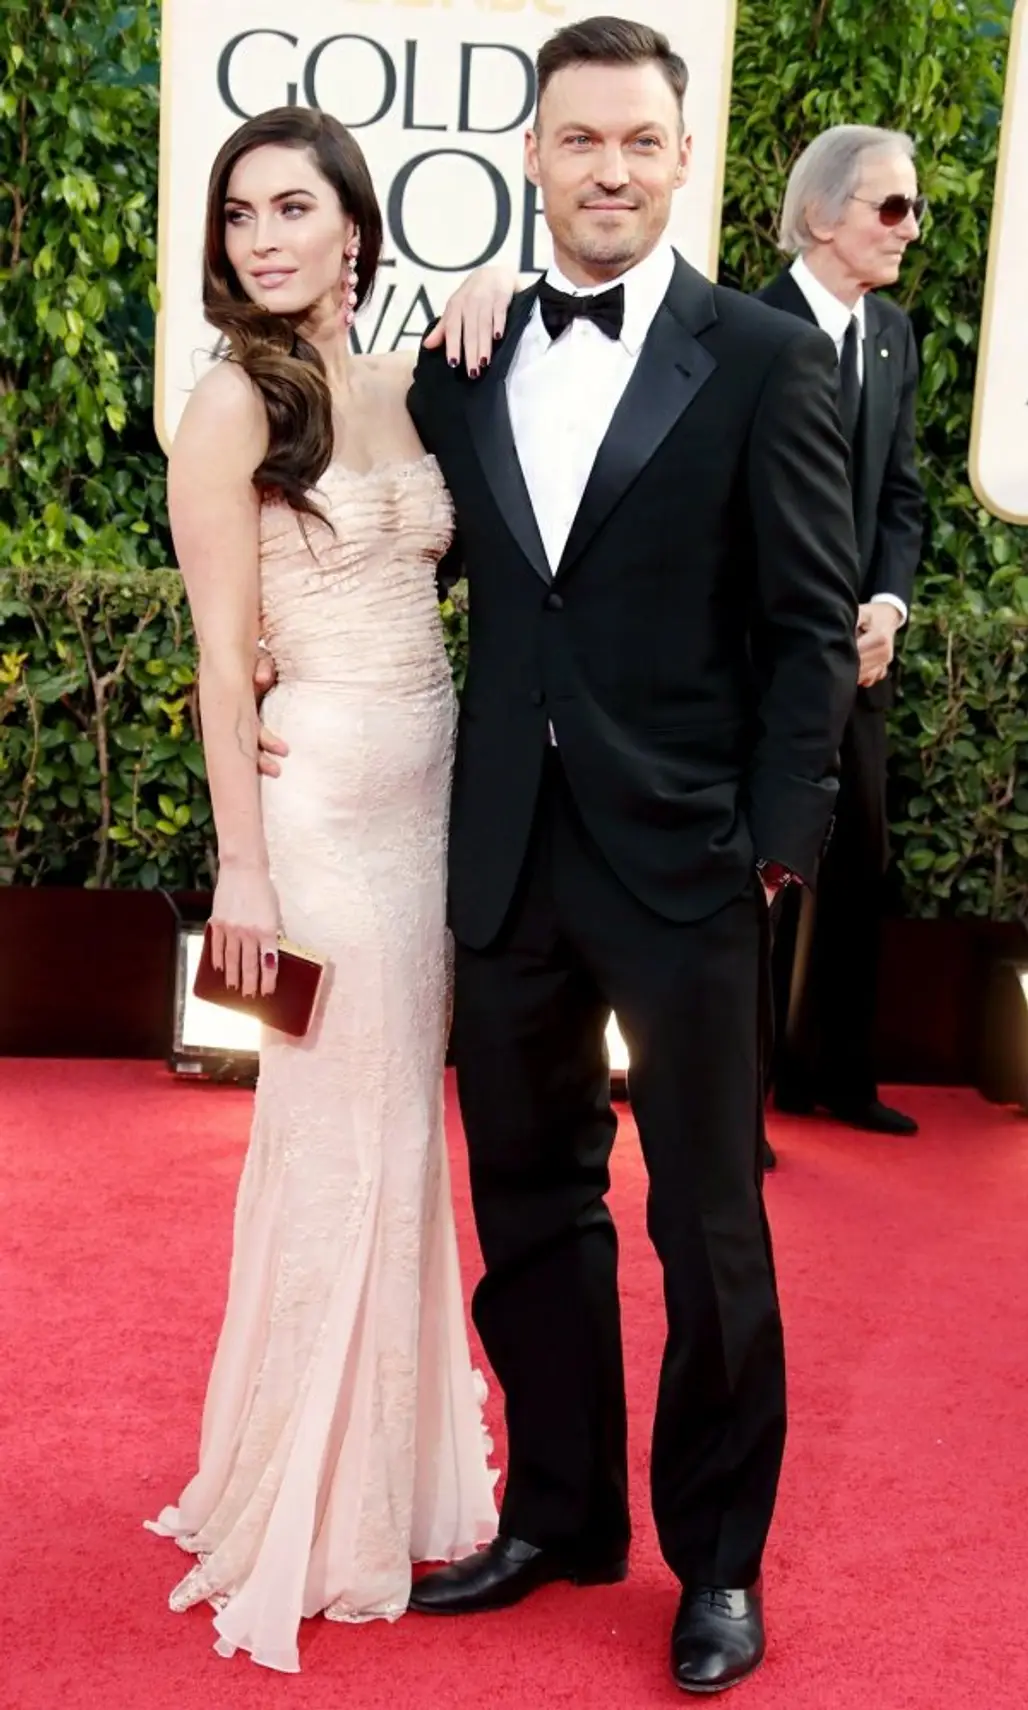 Megan Fox and Brian Austin Green